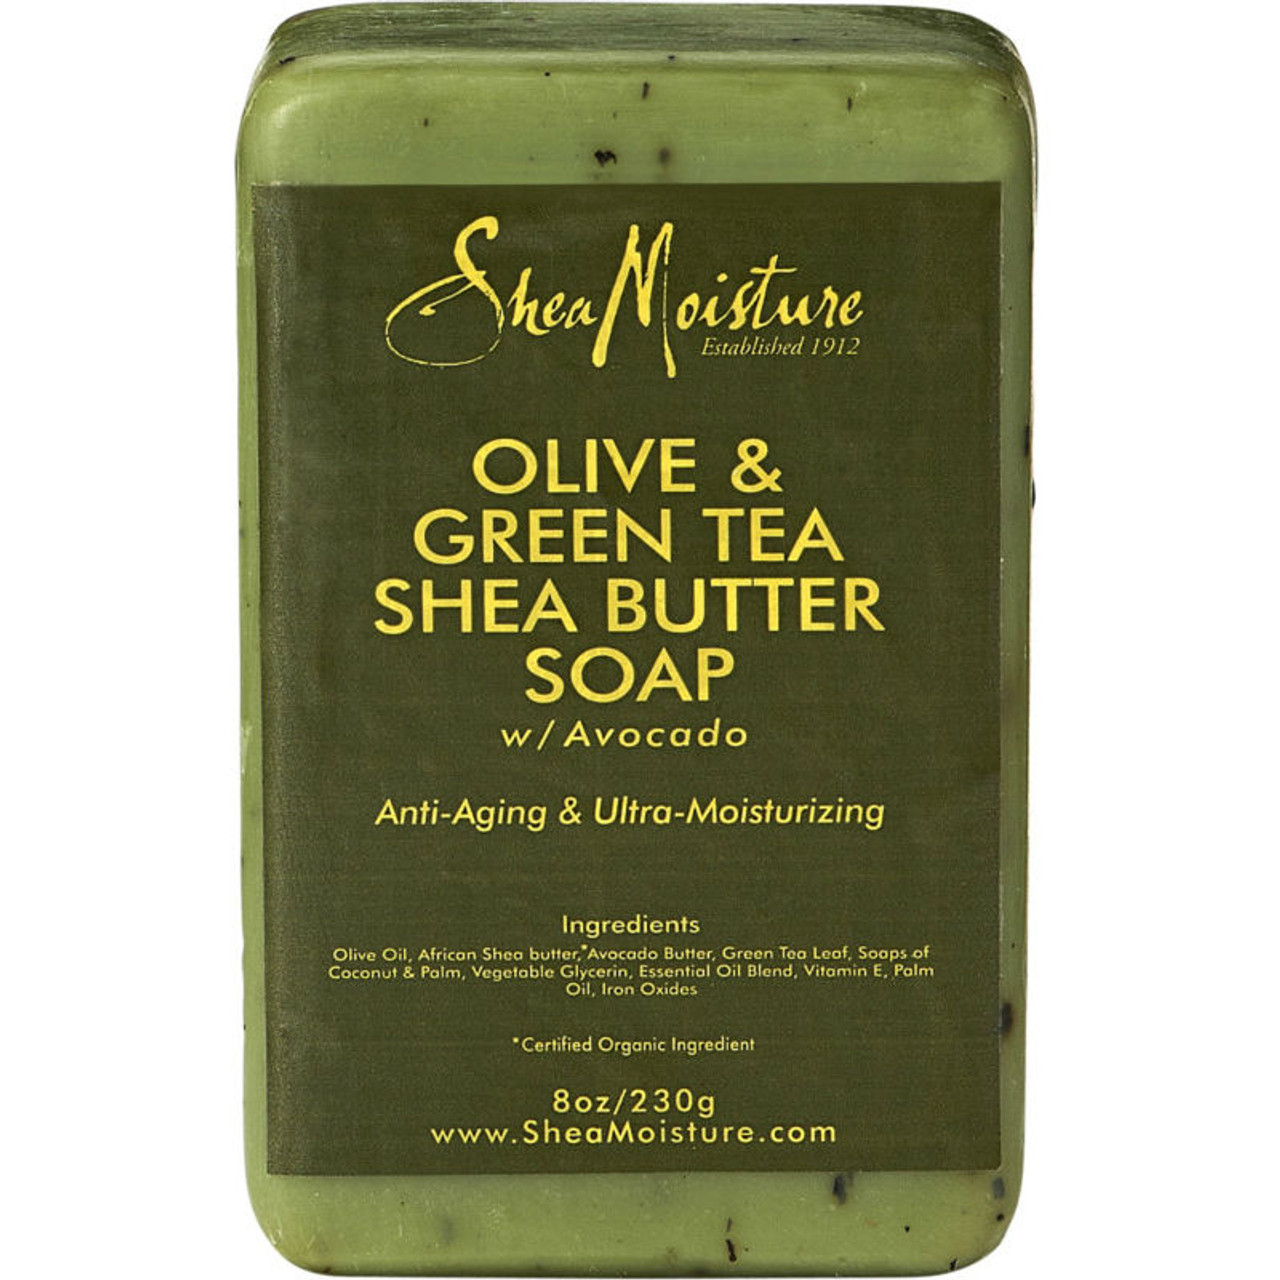 SheaMoisture Olive & Green Tea Shea Butter Soap Bar (8 oz